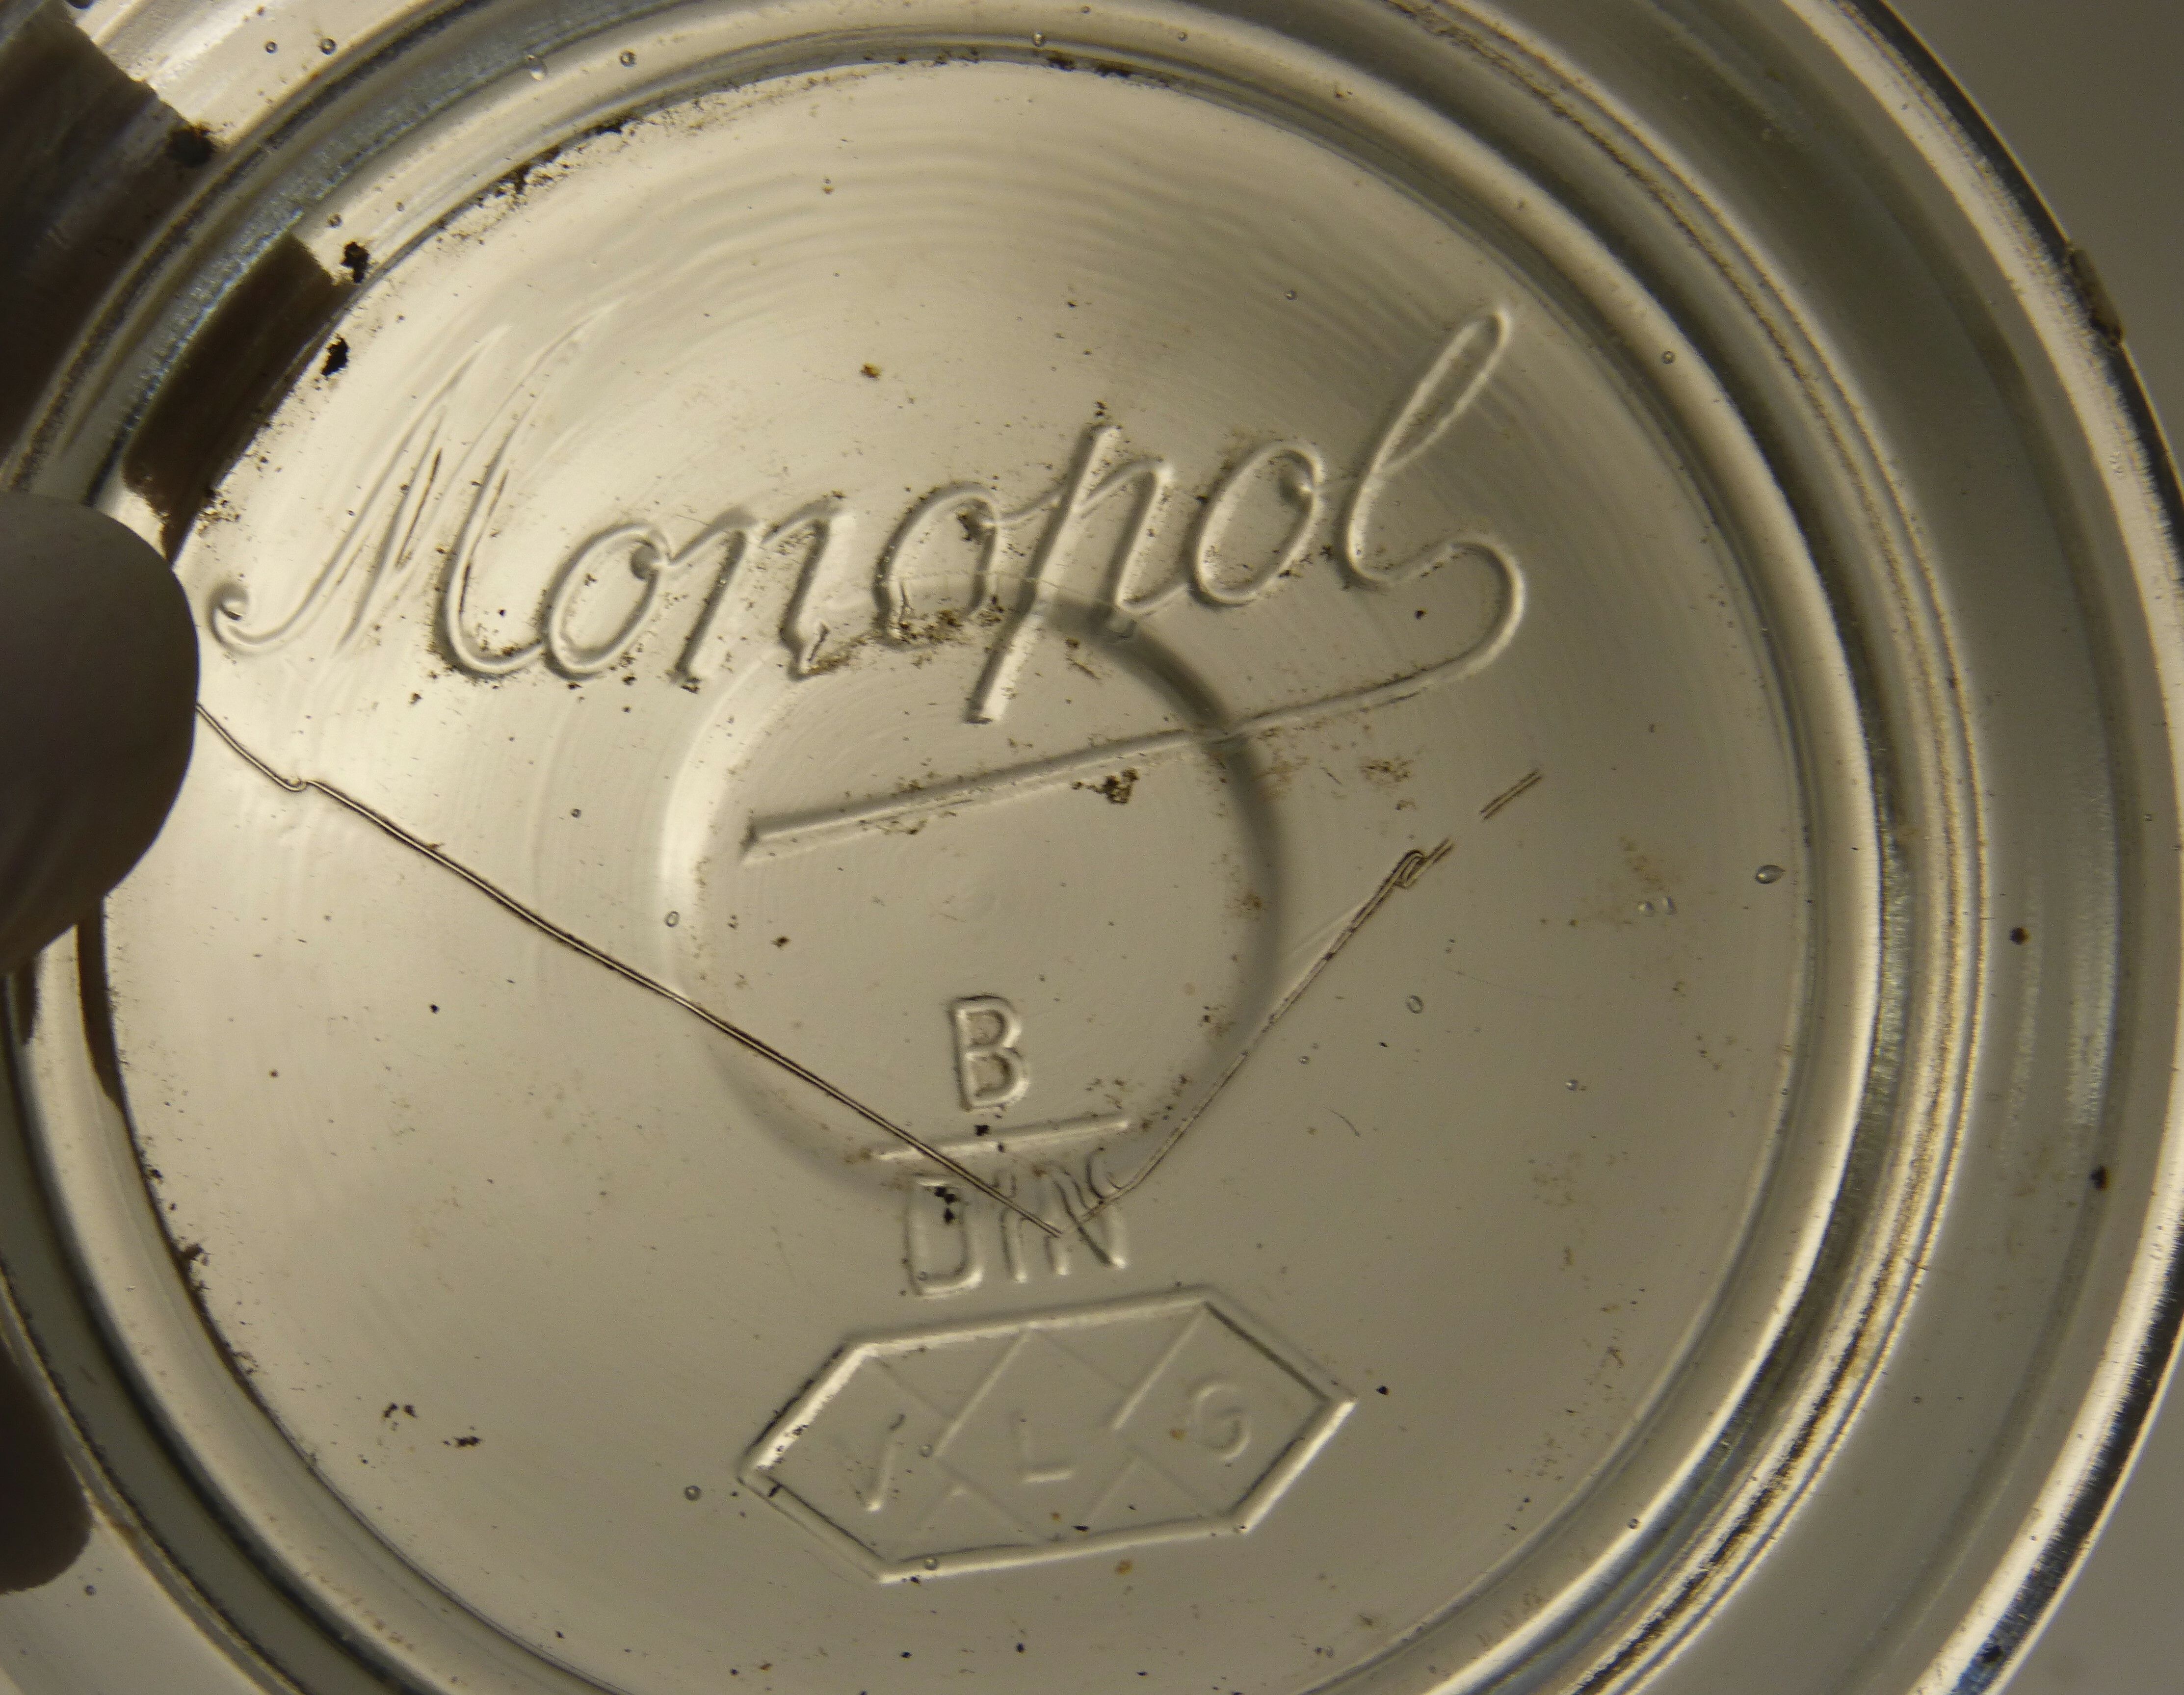 Einmachglasdeckel der Marke "Monopol" (Städt. Hellweg-Museum Geseke CC BY-NC-SA)